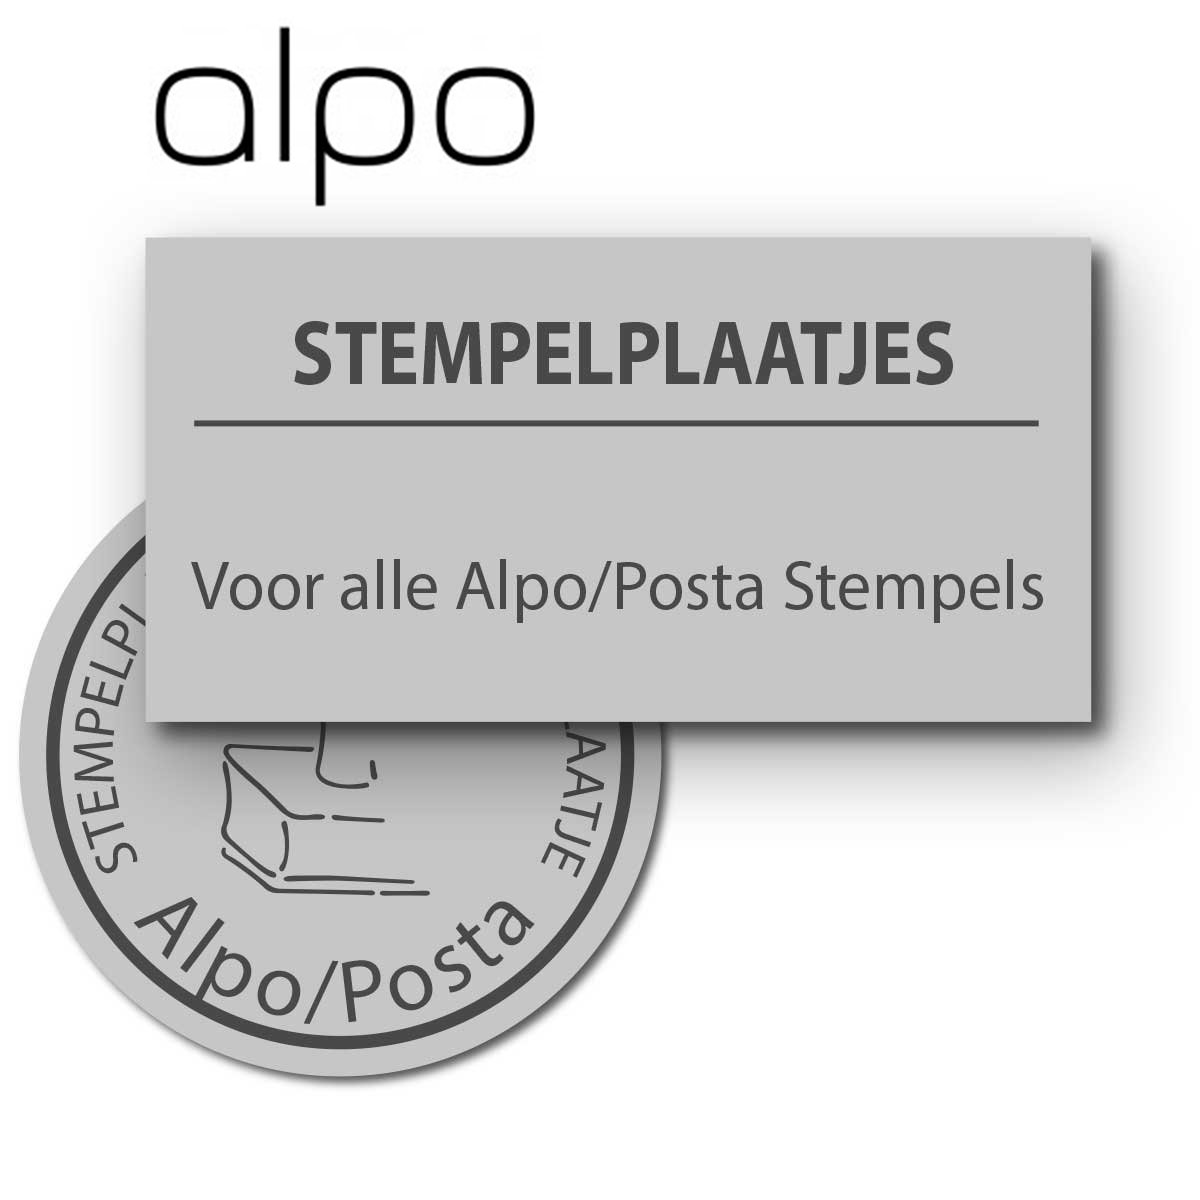 Alpo / Posta tekstplaatjes